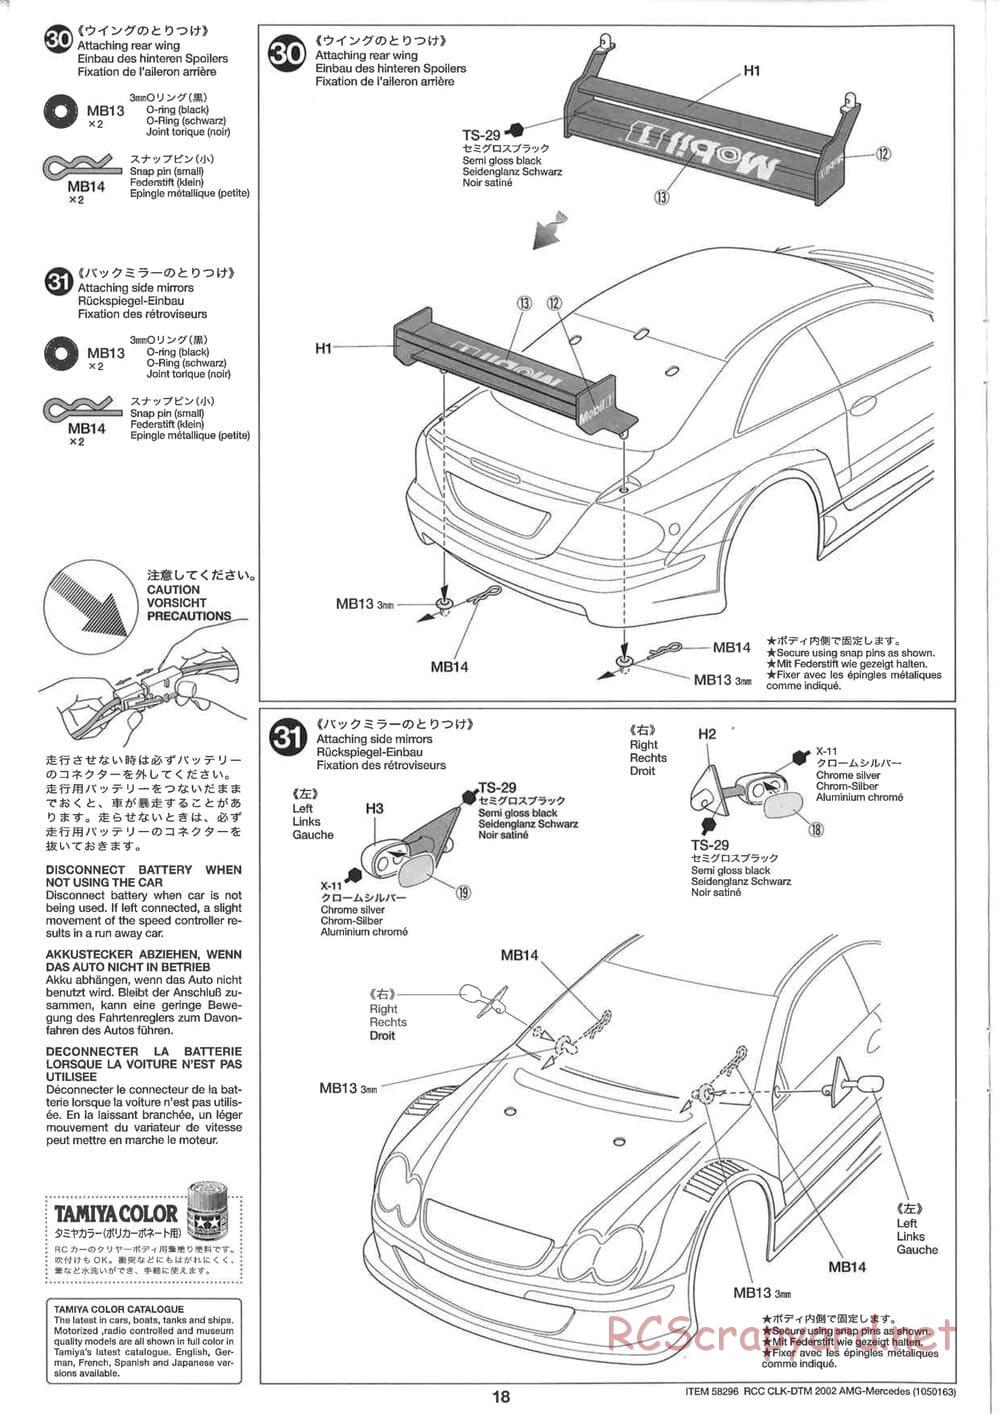 Tamiya - CLK DTM 2002 AMG Mercedes - TL-01 LA Chassis - Manual - Page 18